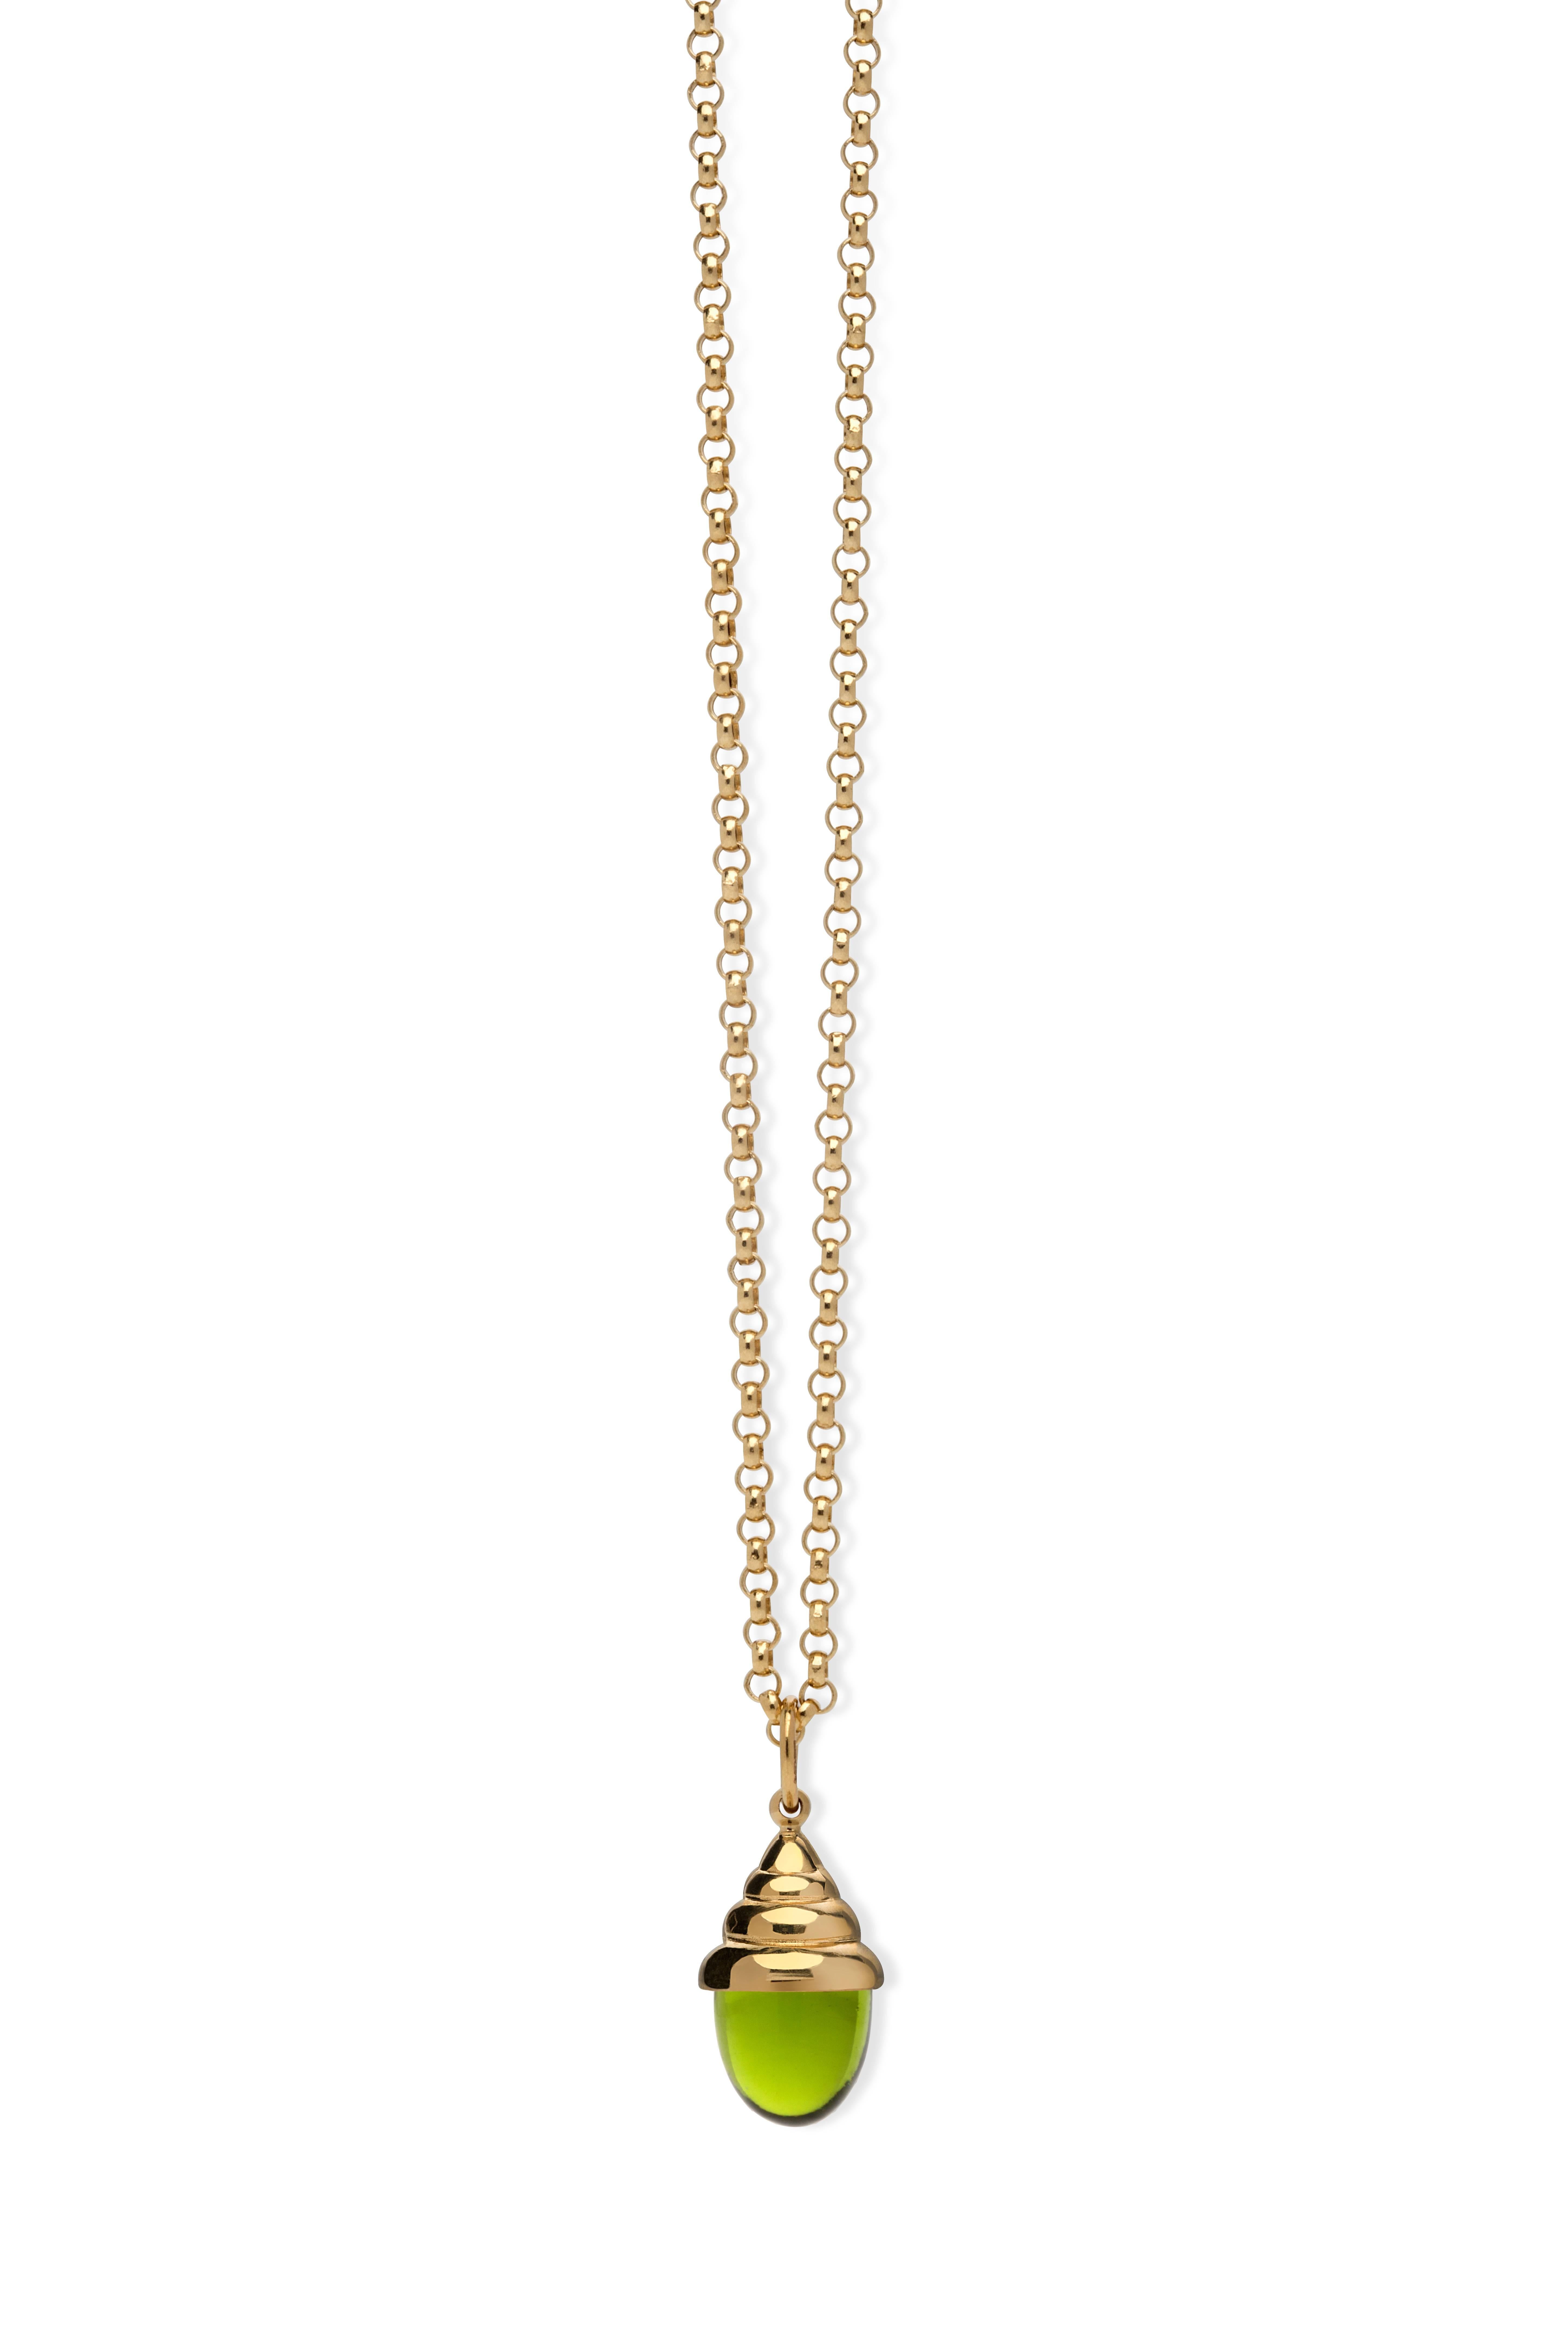 MAVIADA's Torba Modern Peridot Quartz 18 Karat Yellow Gold Drop Pendant Necklace For Sale 2